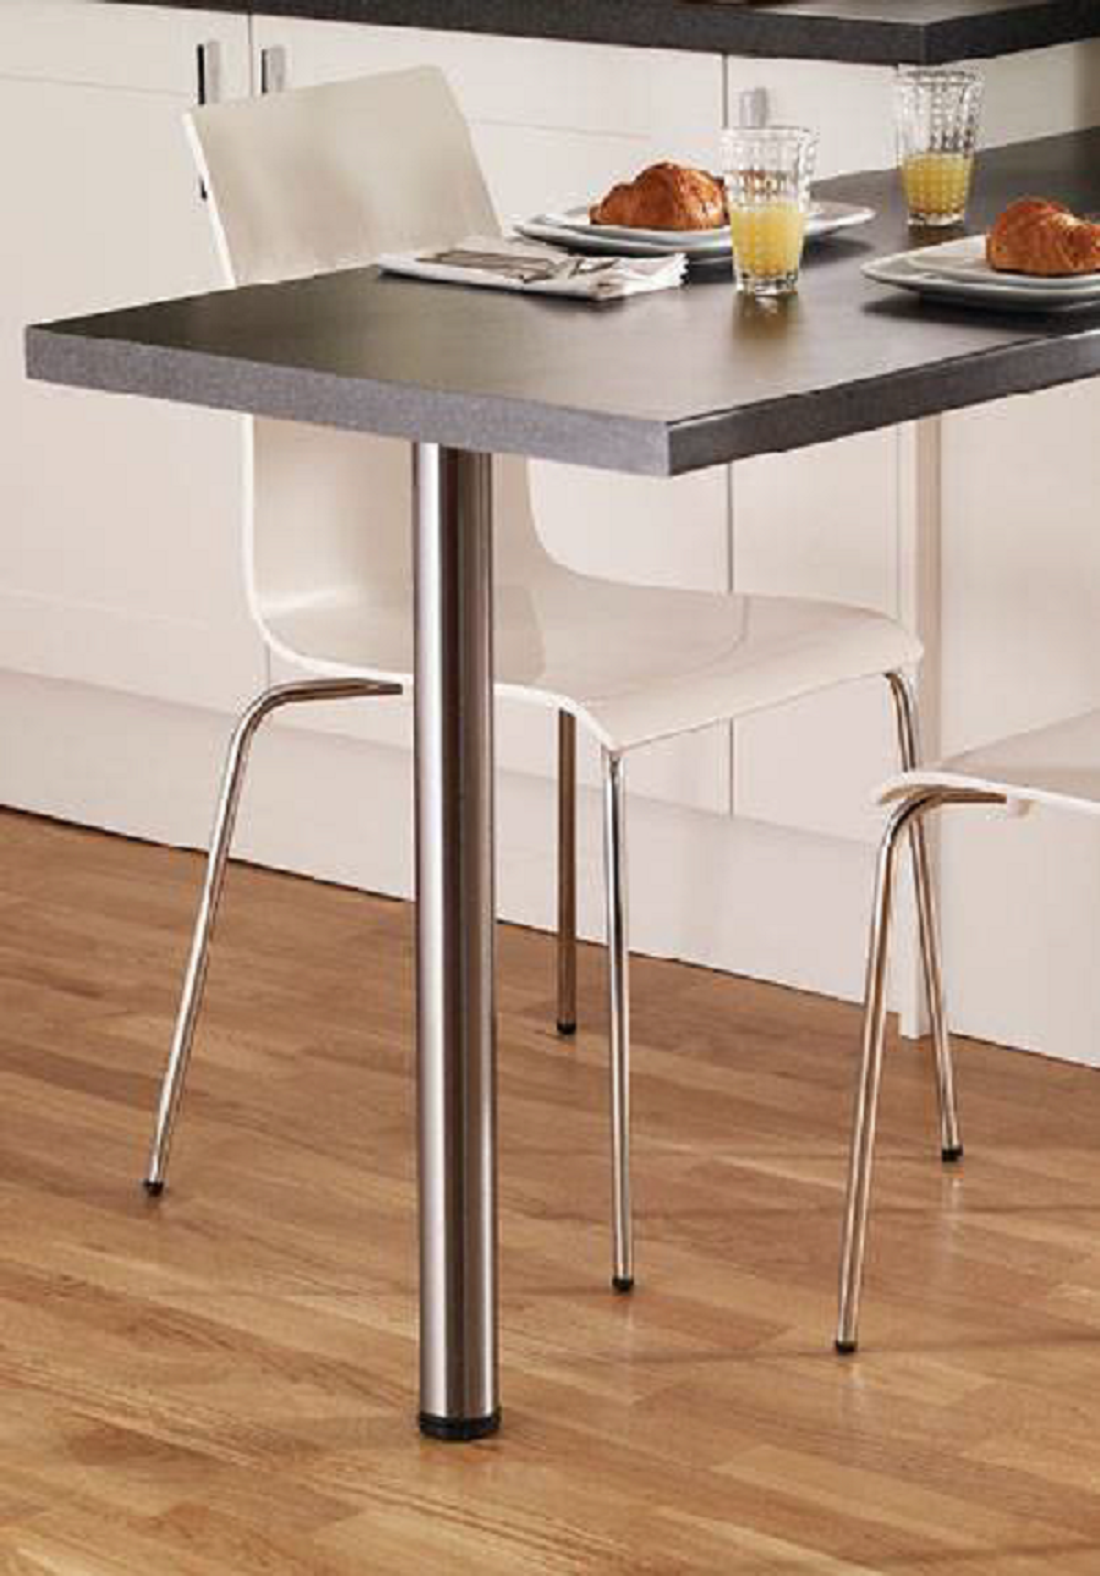 2PCS Breakfast Bar Legs Adjustable Breakfast Bar Table Leg Universal for Fit On Any Table 1100mm 